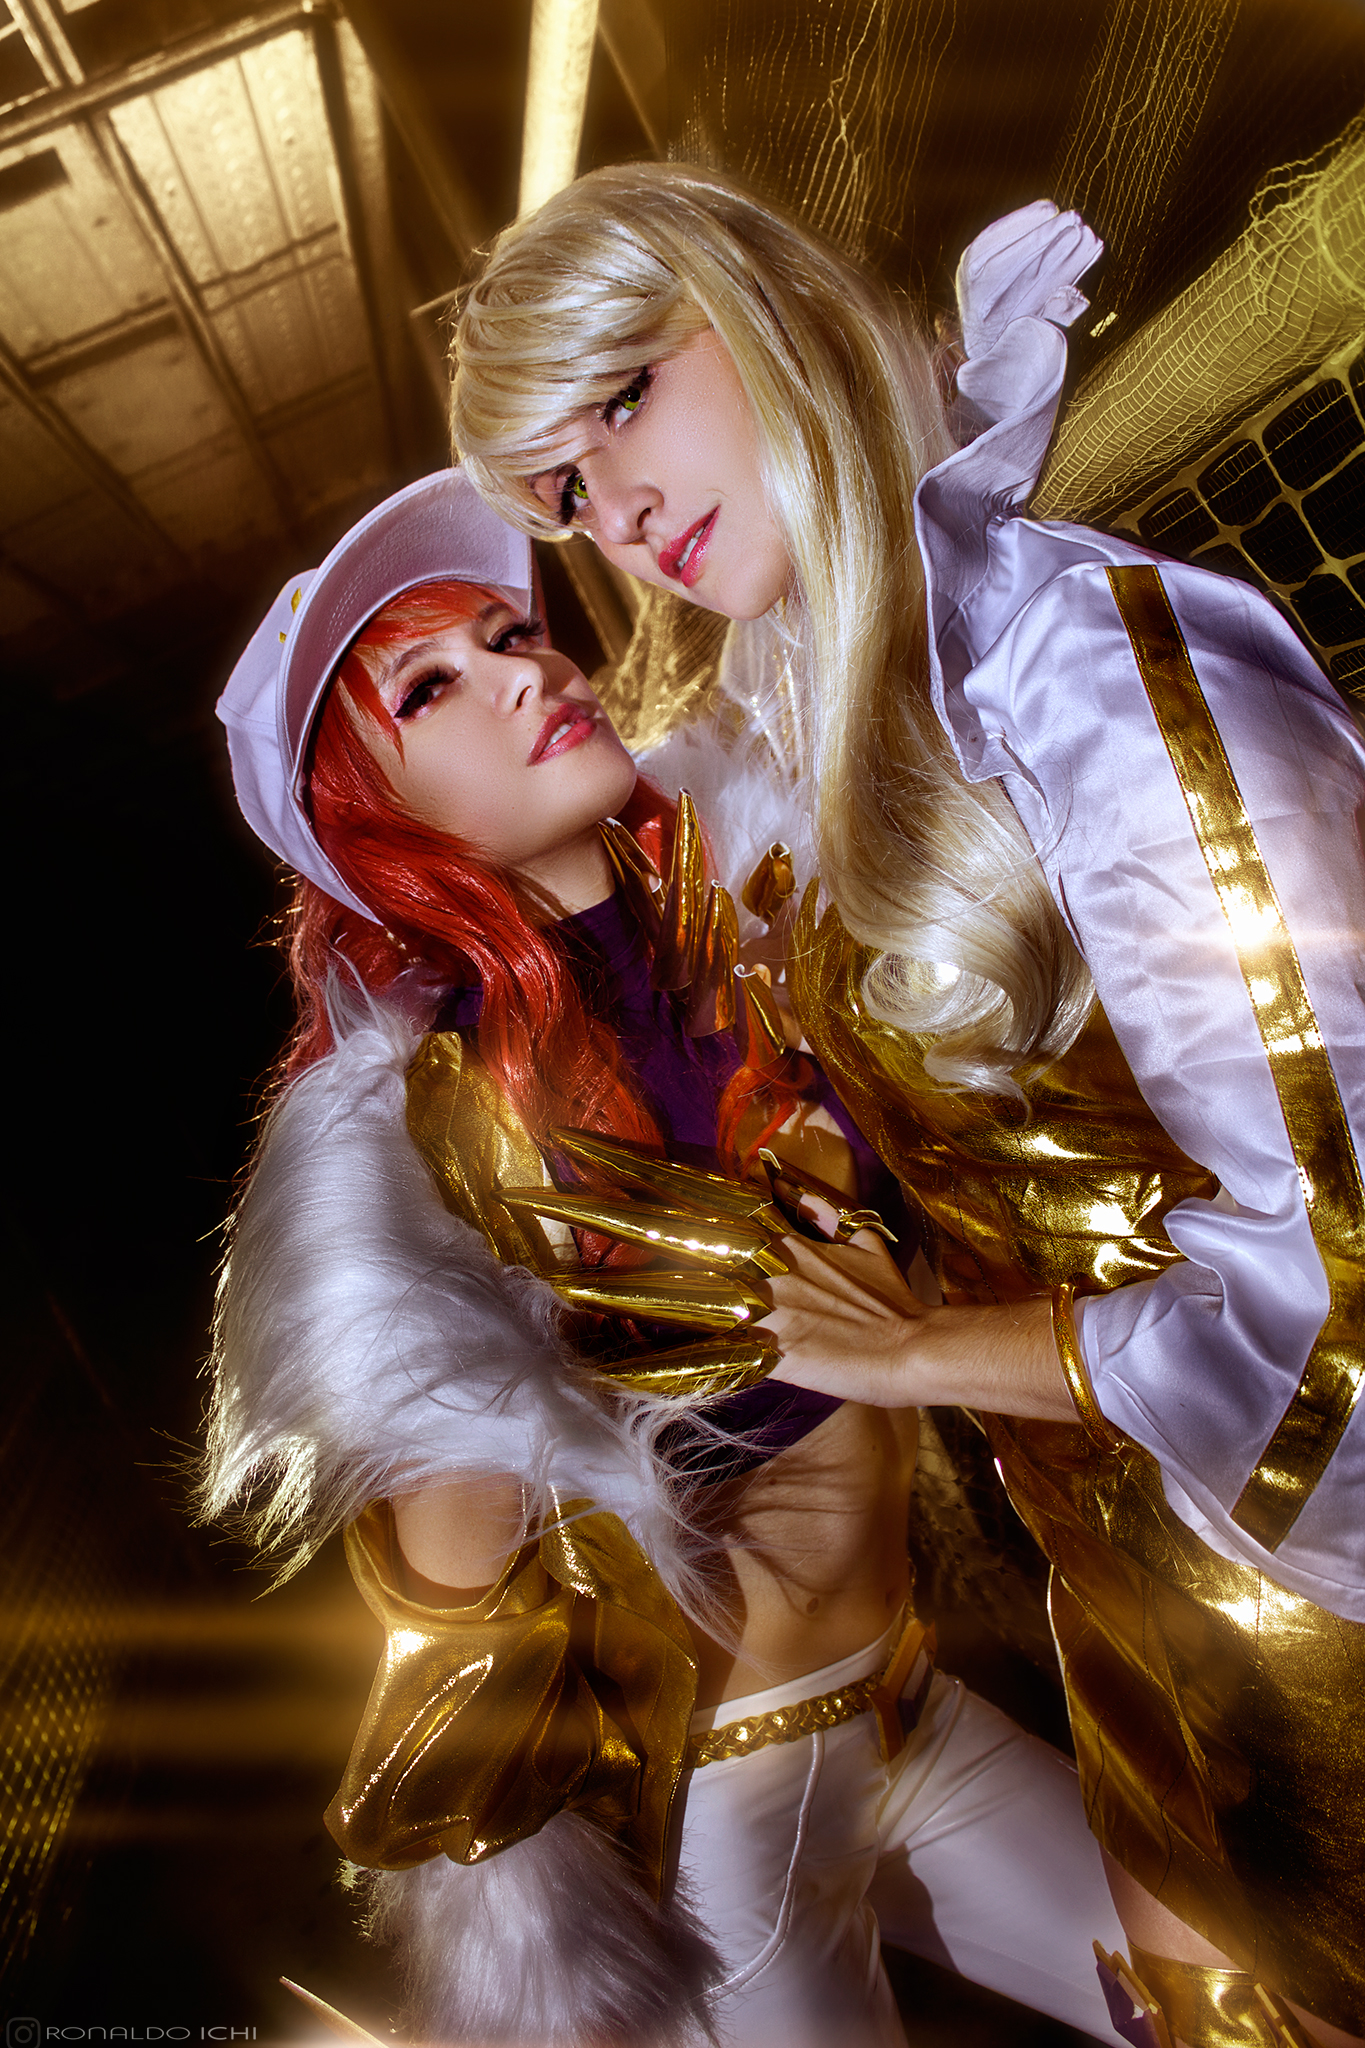 cosplay - Akali & Evelynn, KDA Prestige Edition - cosplayers Rach and Rizzy - photography by Ronaldo Ichi